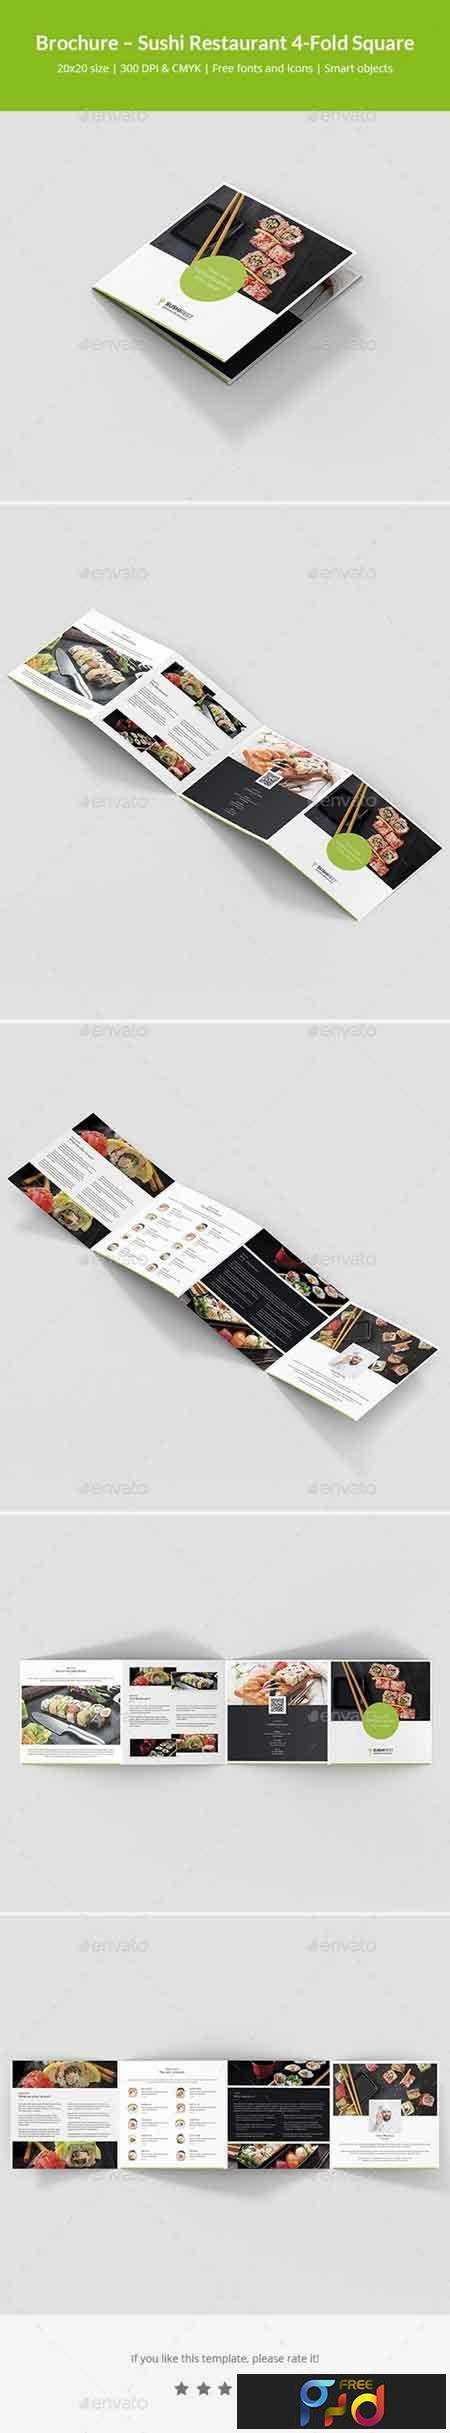 FreePsdVn.com 1802051 TEMPLATE brochure sushi restaurant 4 fold square 21311528